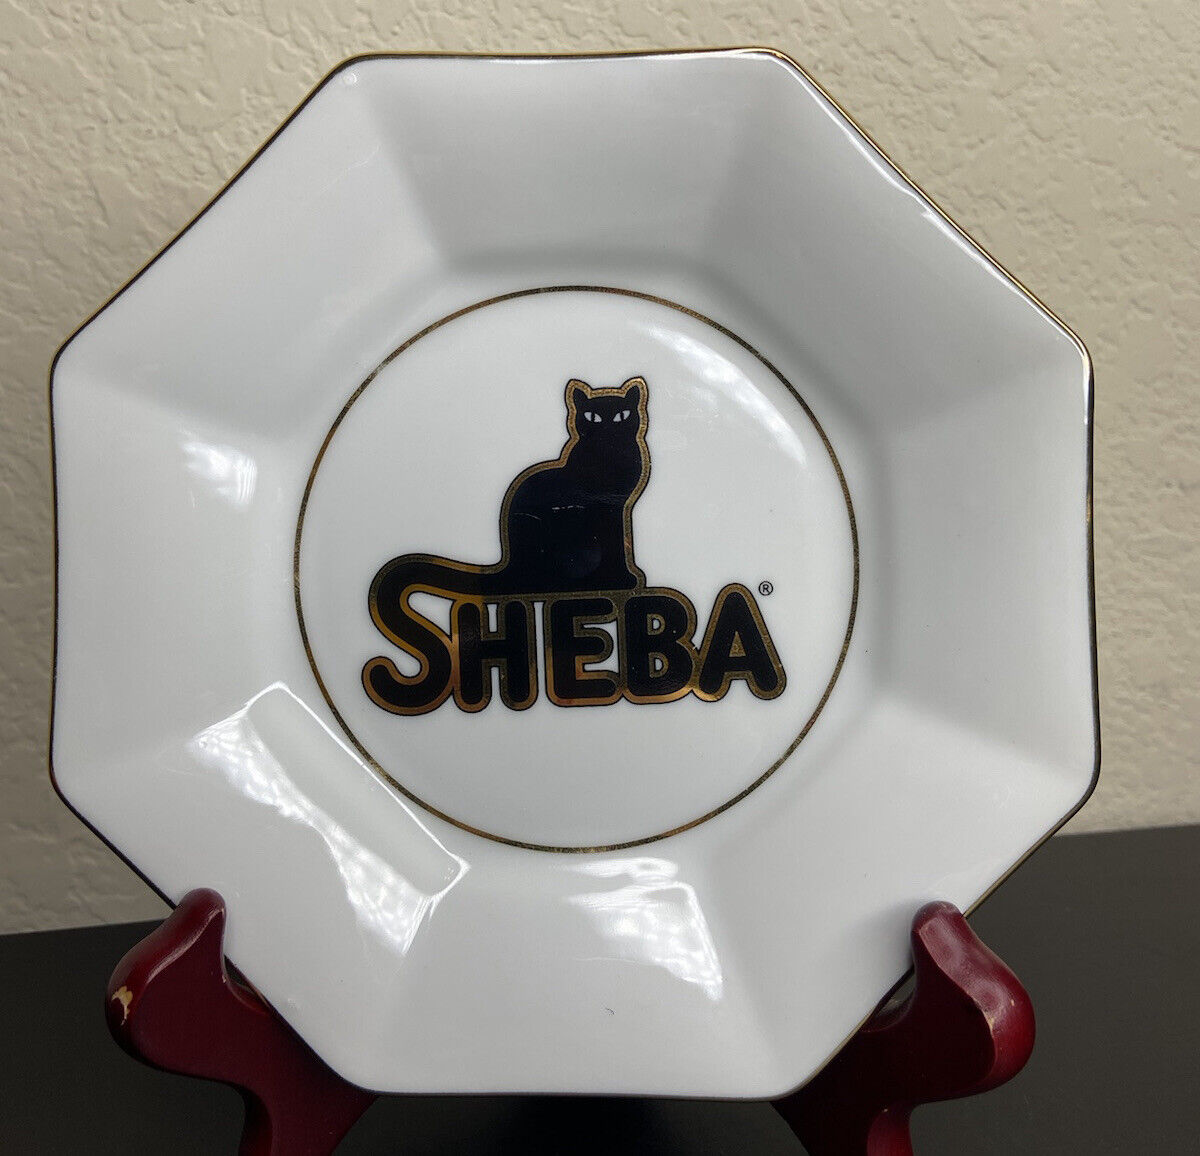 Sheba Cat Food Rare Promotional 6” Plate Advertising Octagonal Porcelain Dish